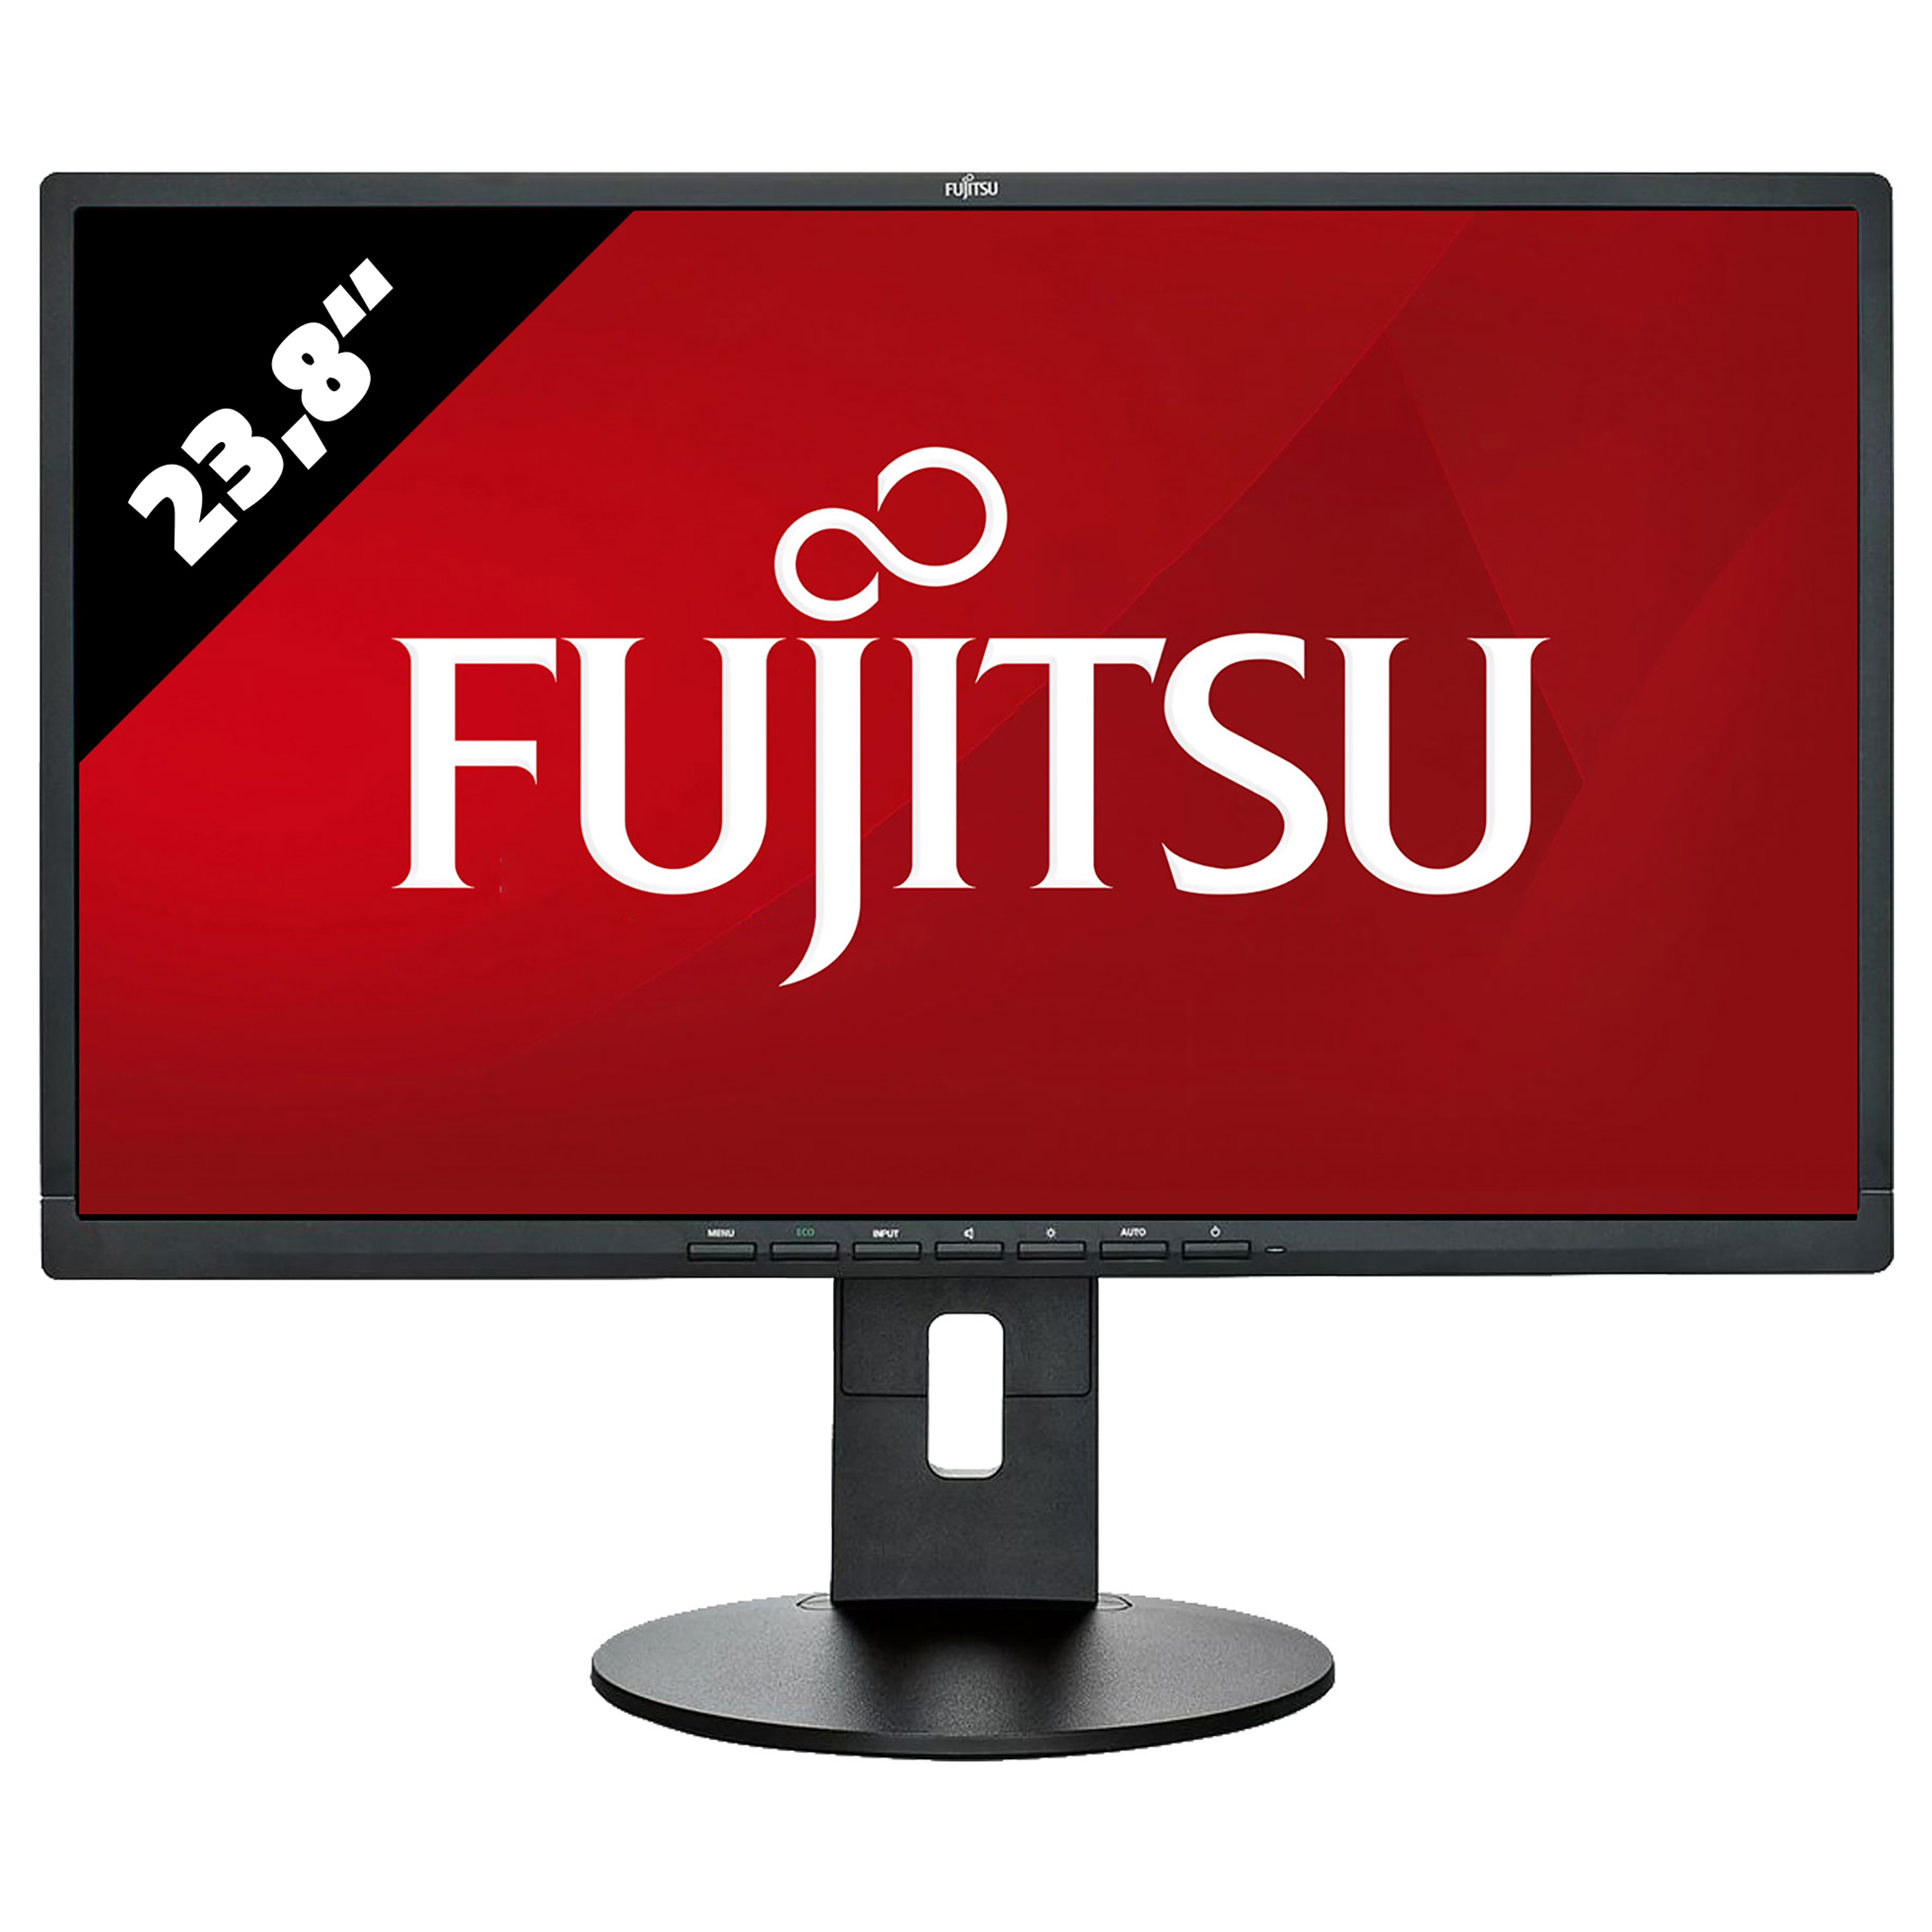 Fujitsu Display E24-8 TS Pro - 1920 x 1080 - FHD